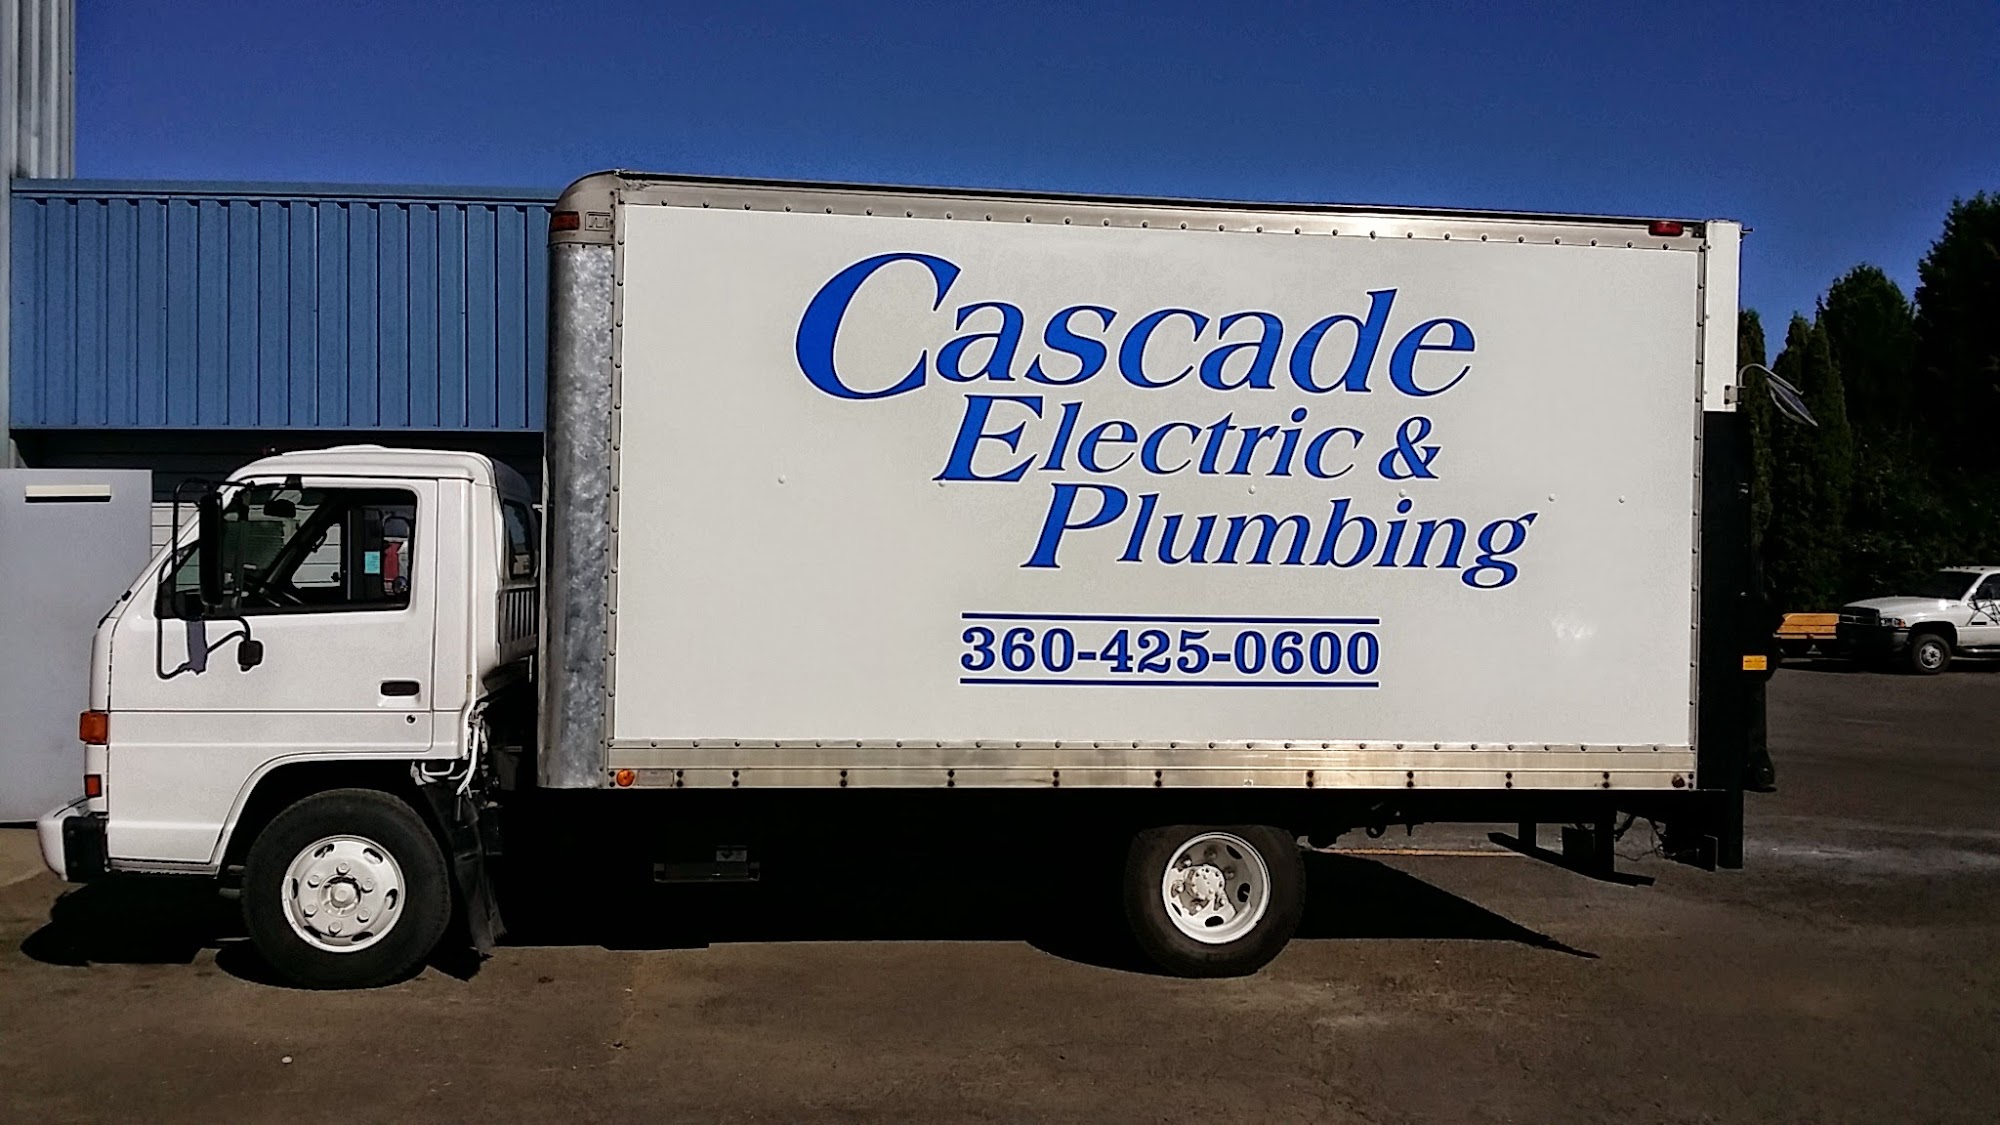 Cascade Electric & Plumbing